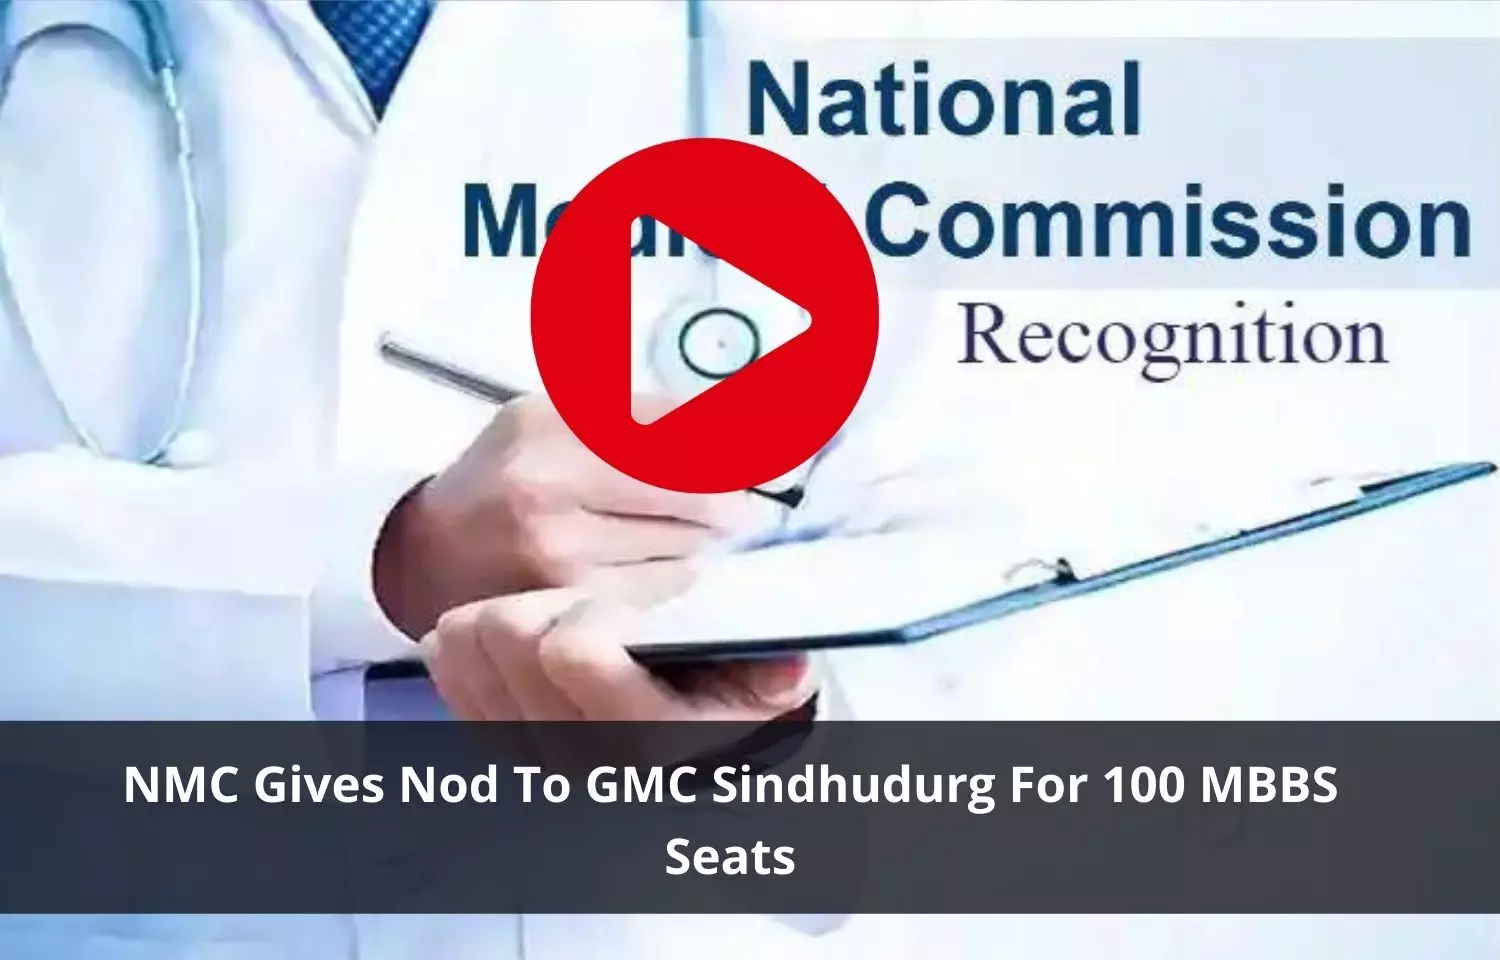 GMC Sindhudurg gets 100 MBBS seats, NMC gives nod